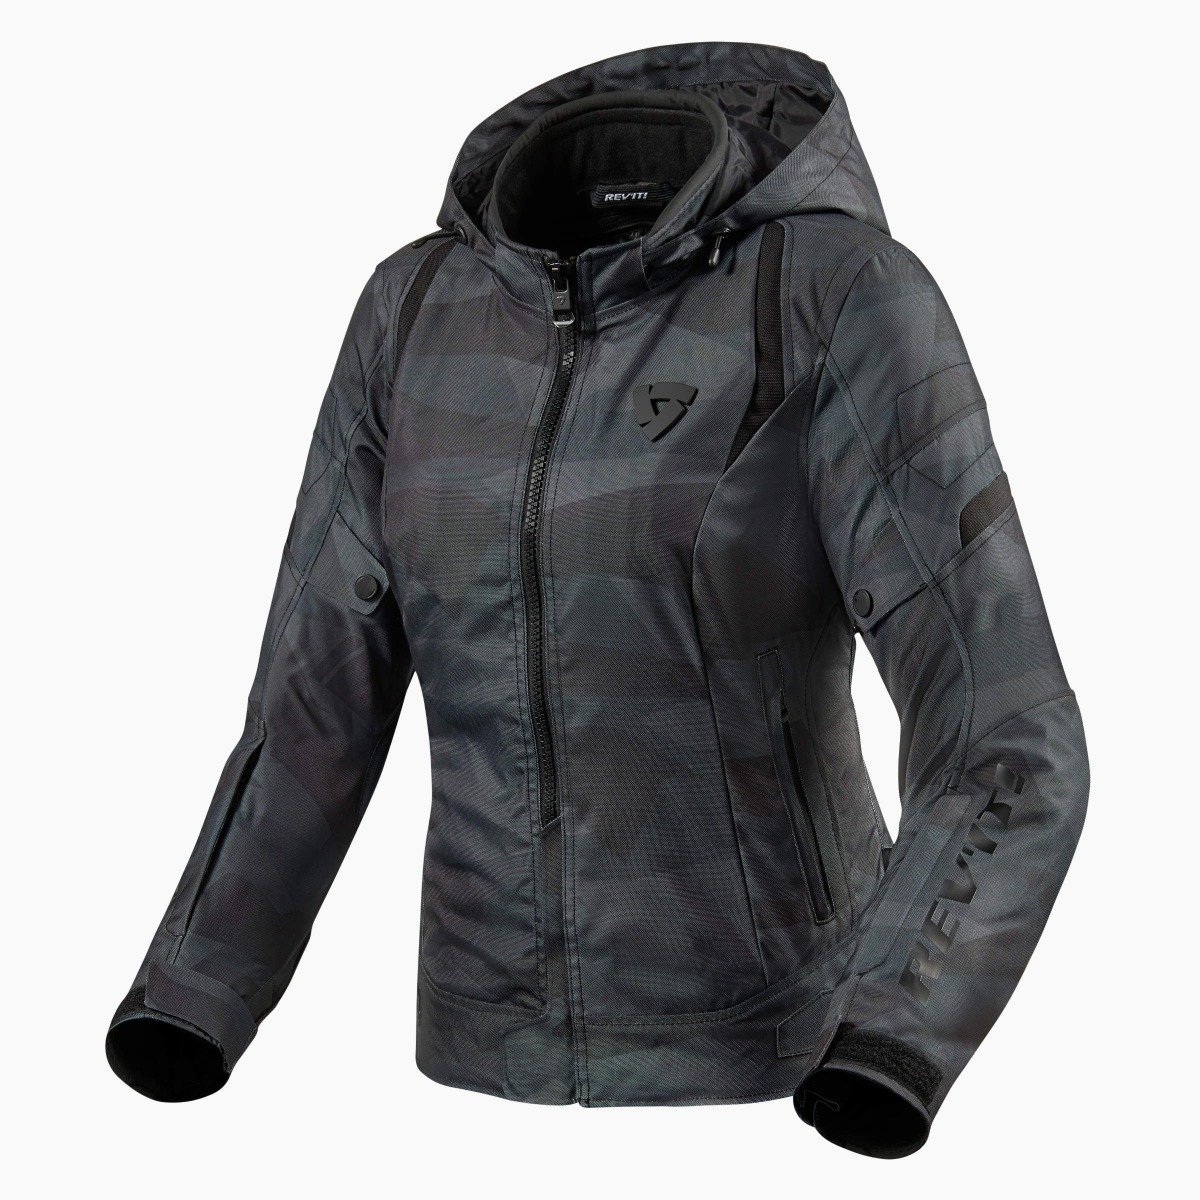 Image of REV'IT! Flare 2 Jacket Lady Camo Black Gray Size 36 EN